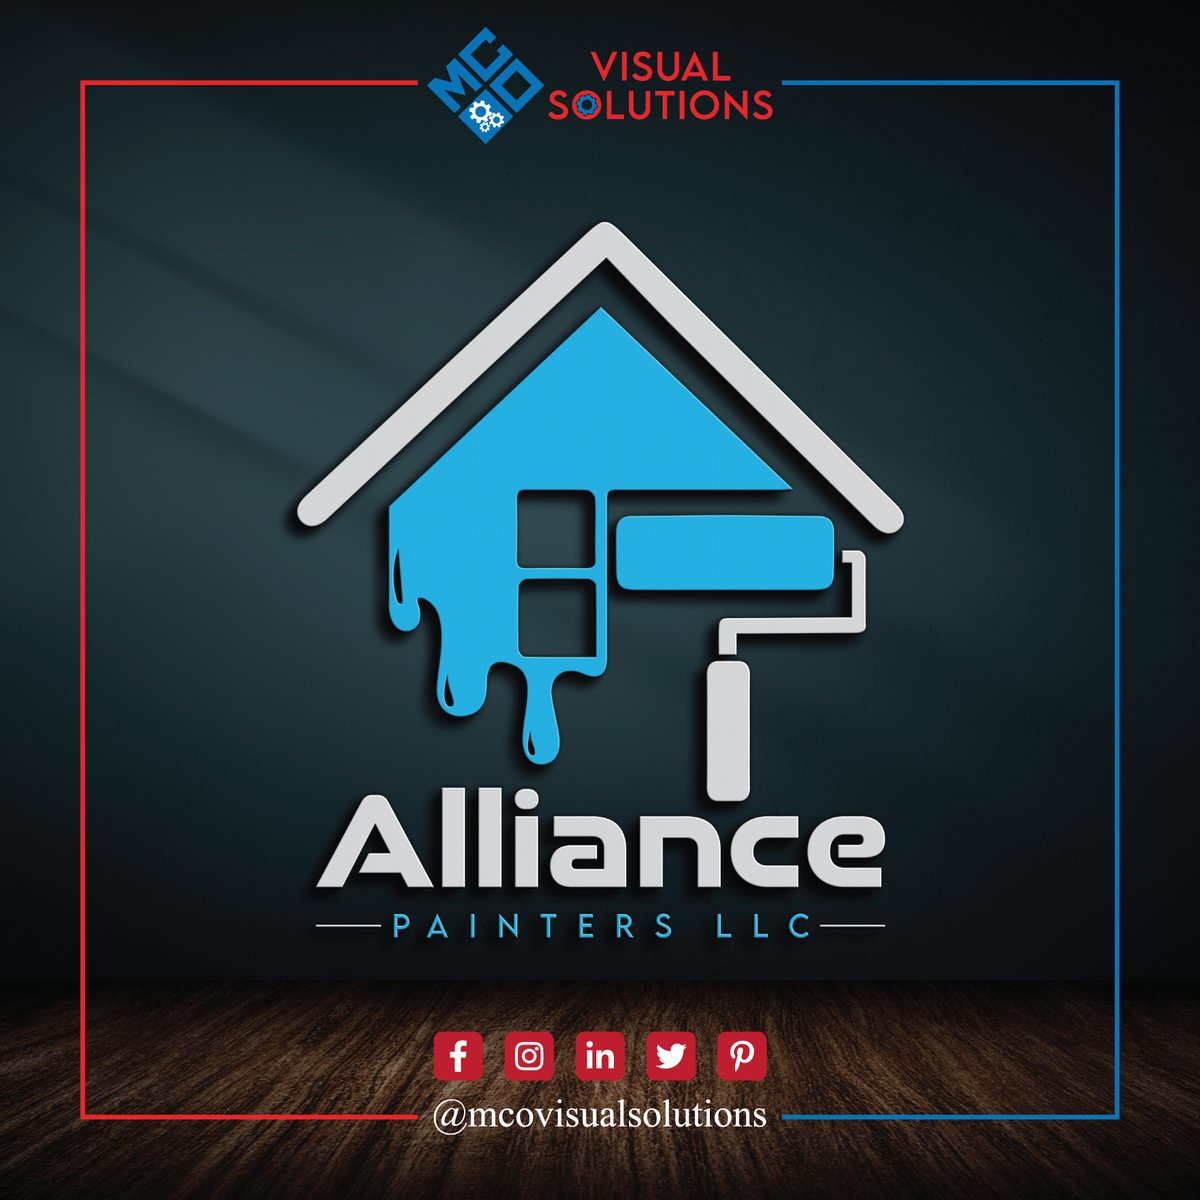 Introducing the new logo for Alliance Painters LLC! 🎨✨

#MCOVisualSolutions #MCO #AlliancePaintersLLC #LogoDesign #Renovation #HomeDecor #RealEstate #RenovationCompany #HomeRenovation #HomeRepairs #InteriorDesign #HomeImprovement #PropertyDevelopment #Remodeling #LogoDesigner